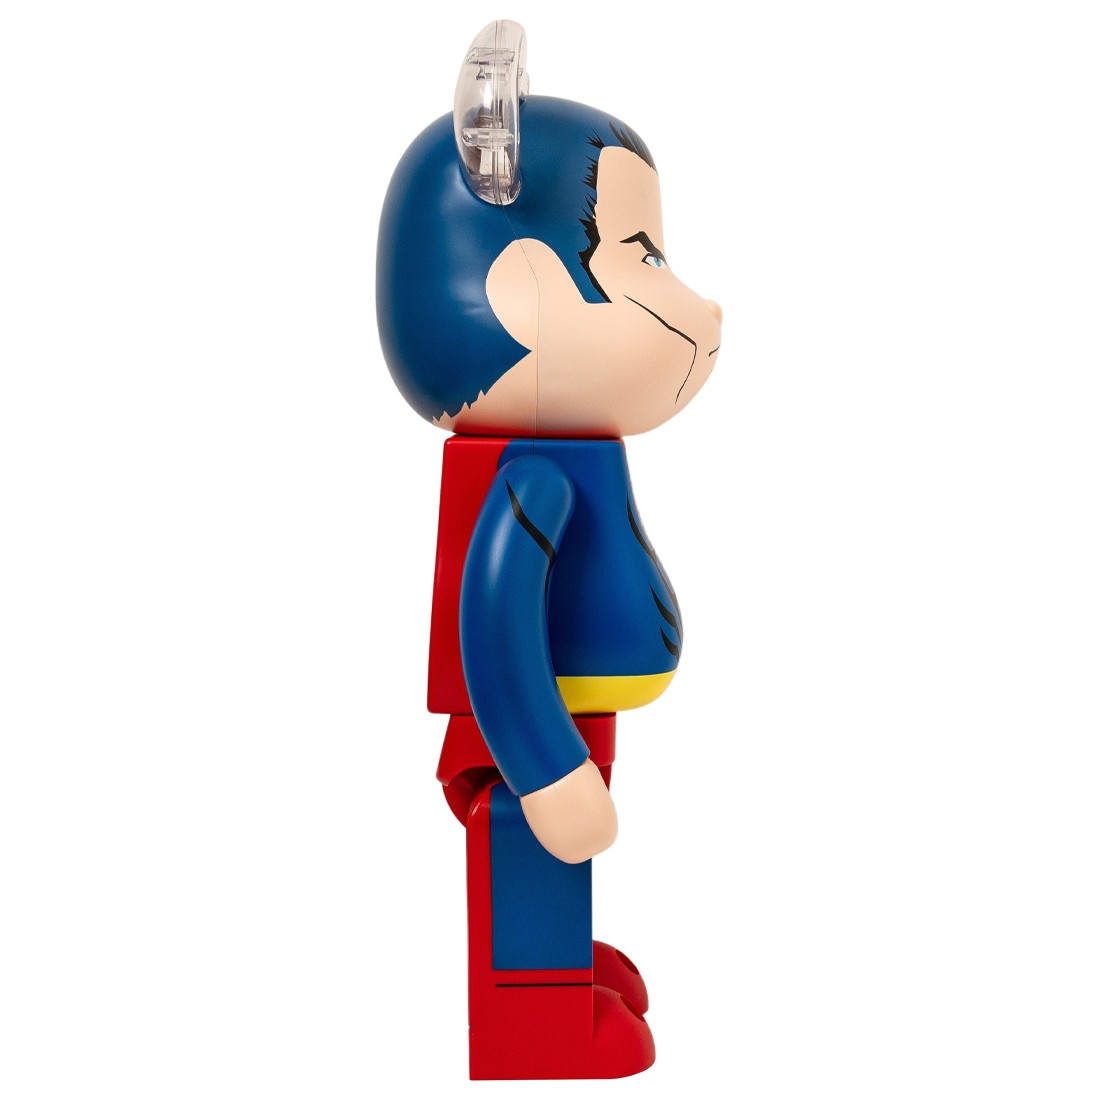 Medicom DC Superman Batman Hush Ver. 1000% Bearbrick Figure (blue)